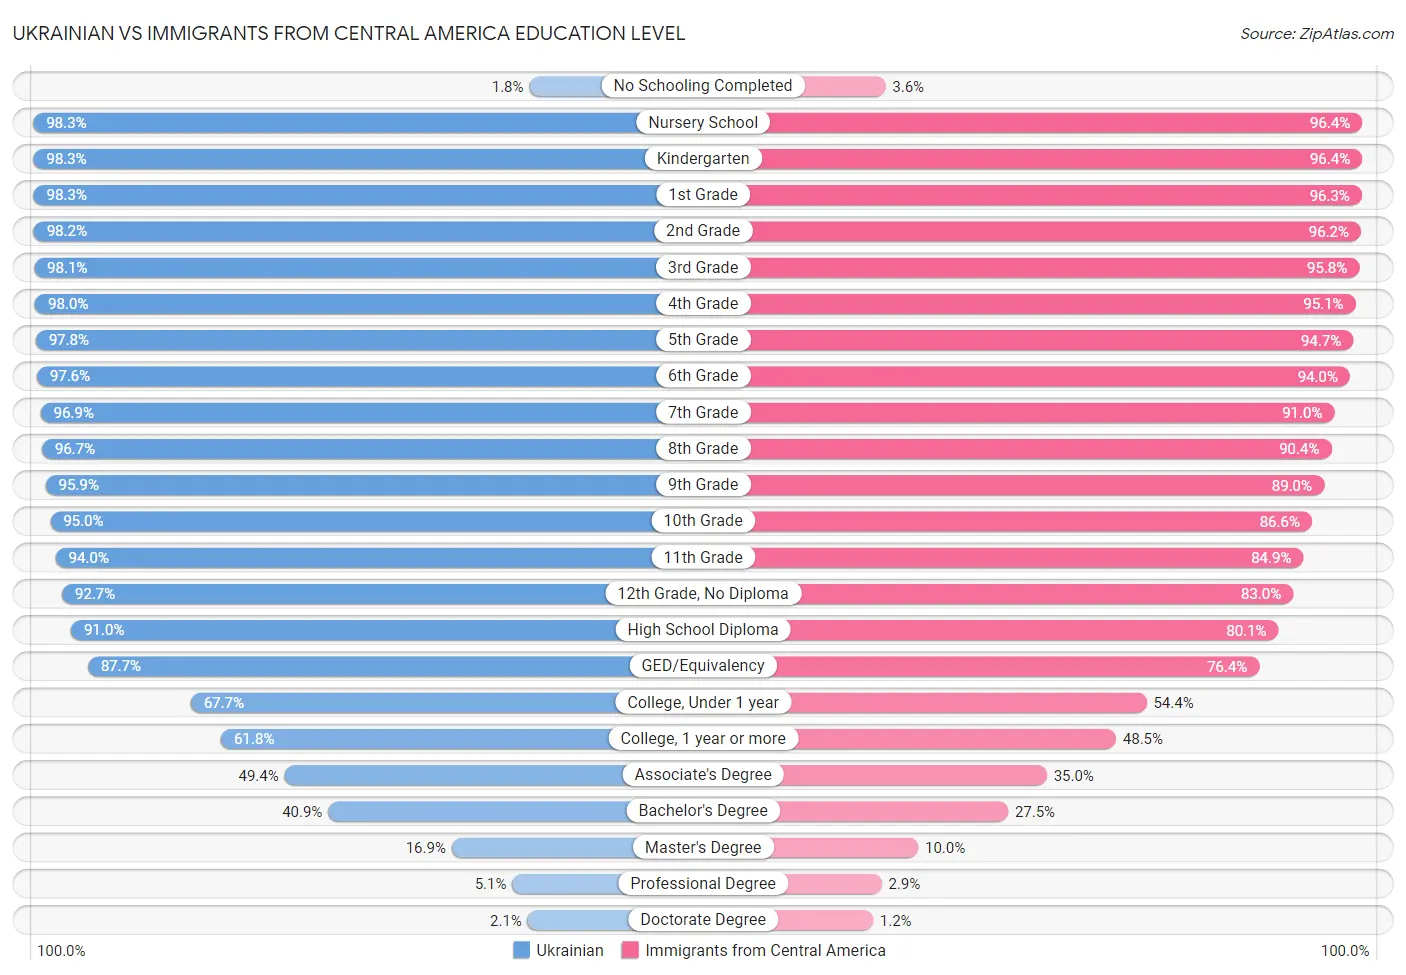 Ukrainian vs Immigrants from Central America Education Level